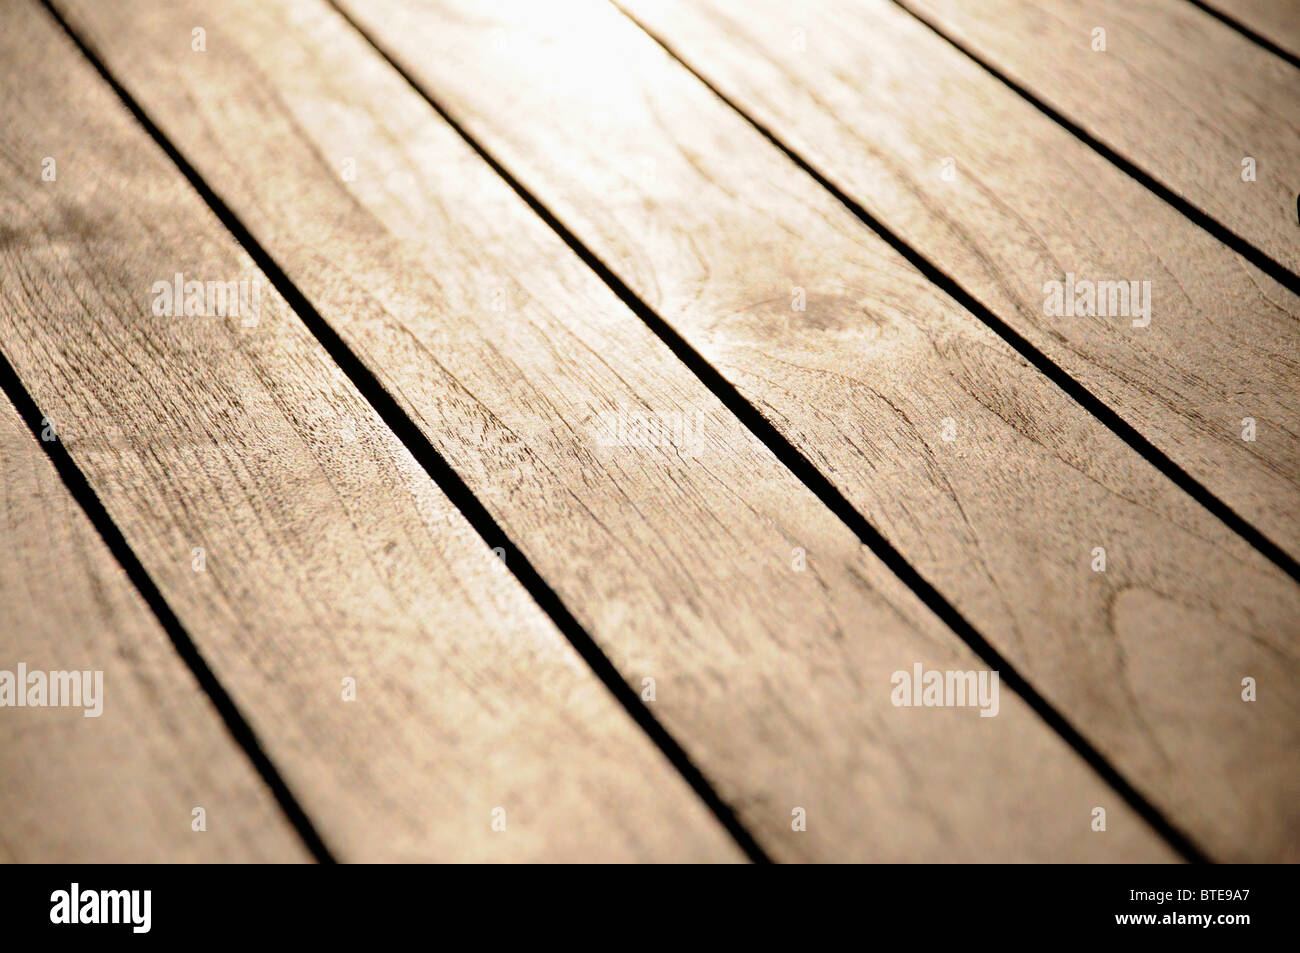 Wood floor, close-up Stock Photo